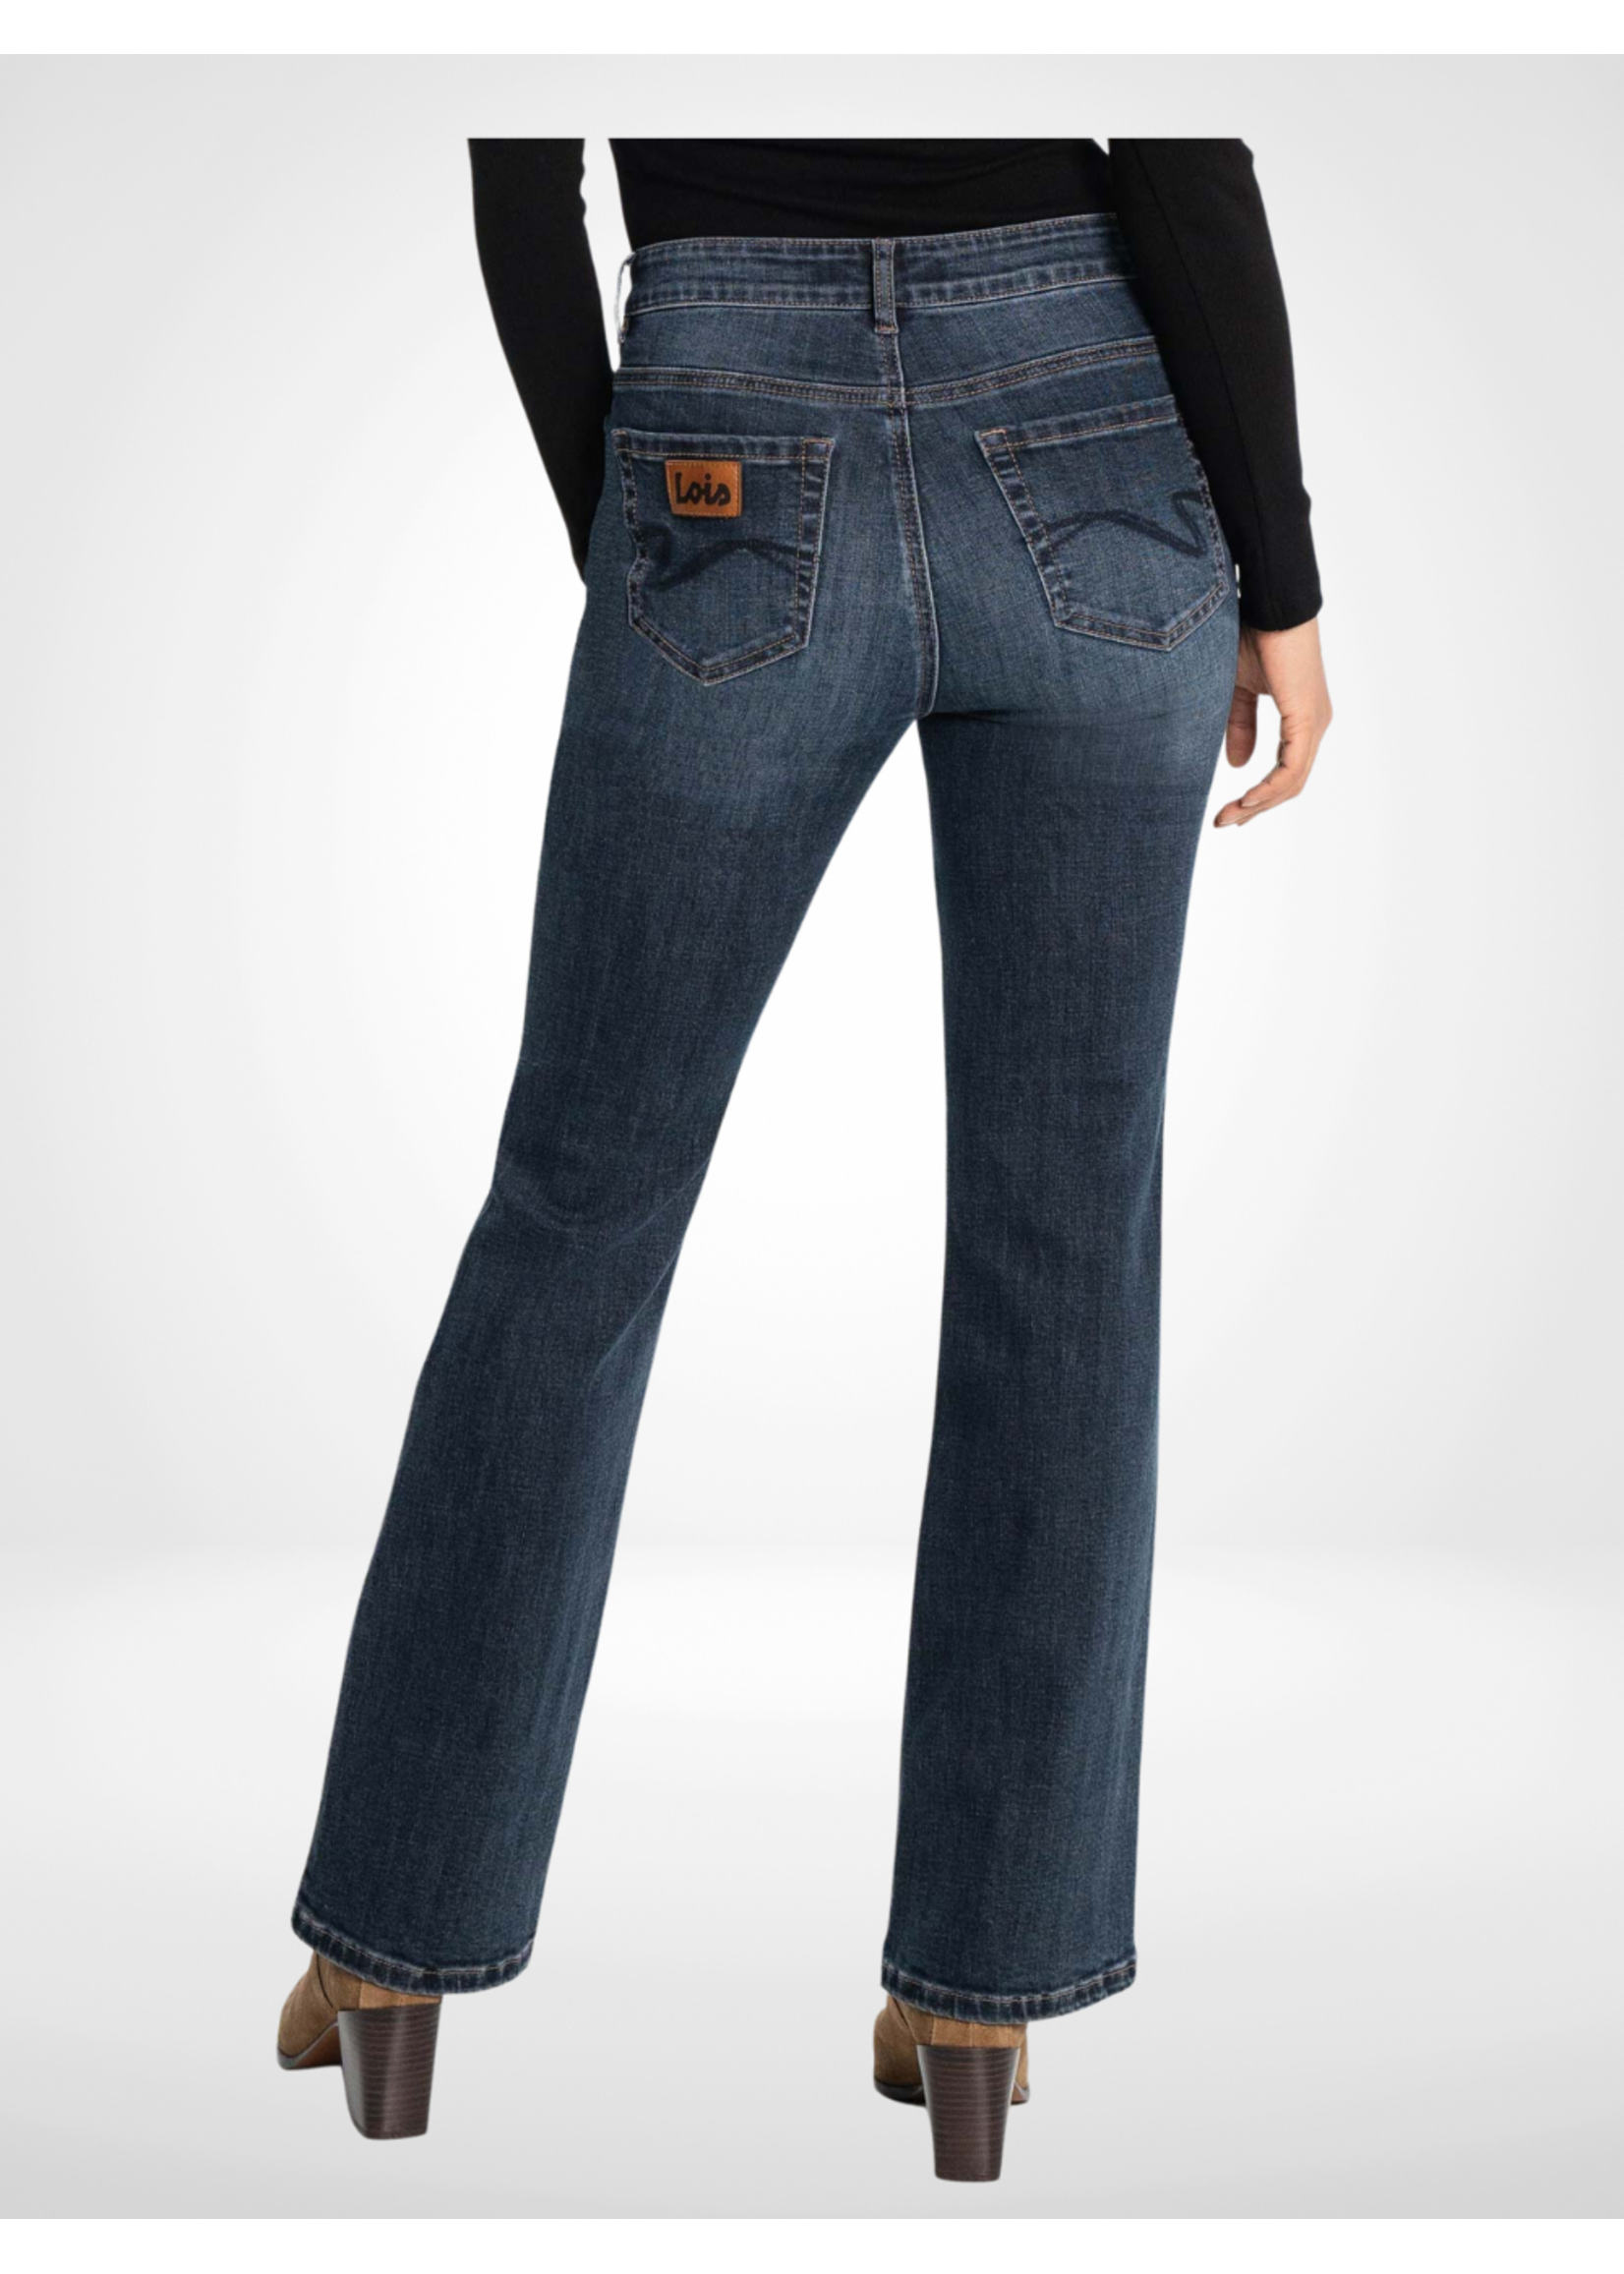 Lois Blackbull Apparel Erika Bootcut High Waist Jeans